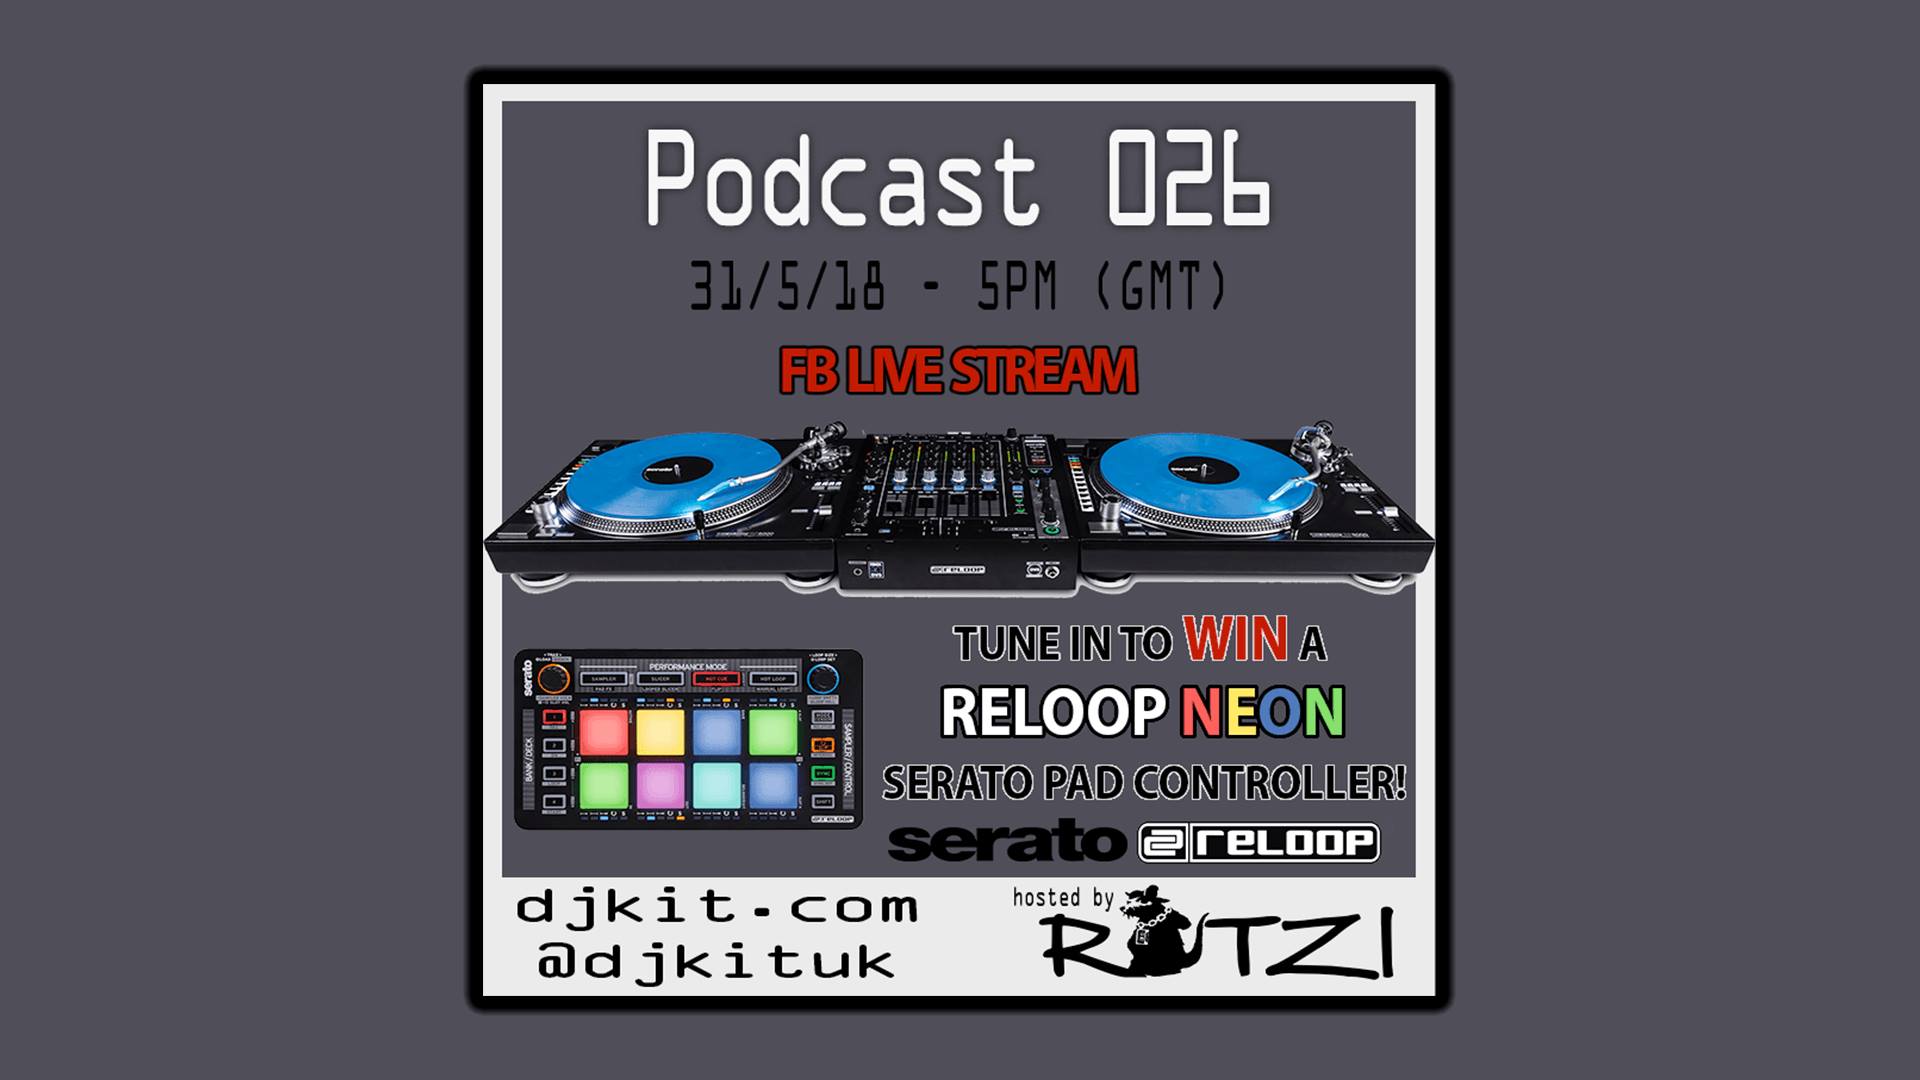 DJKit Podcast 026 - FB Live Stream - WIN A Reloop Neon!